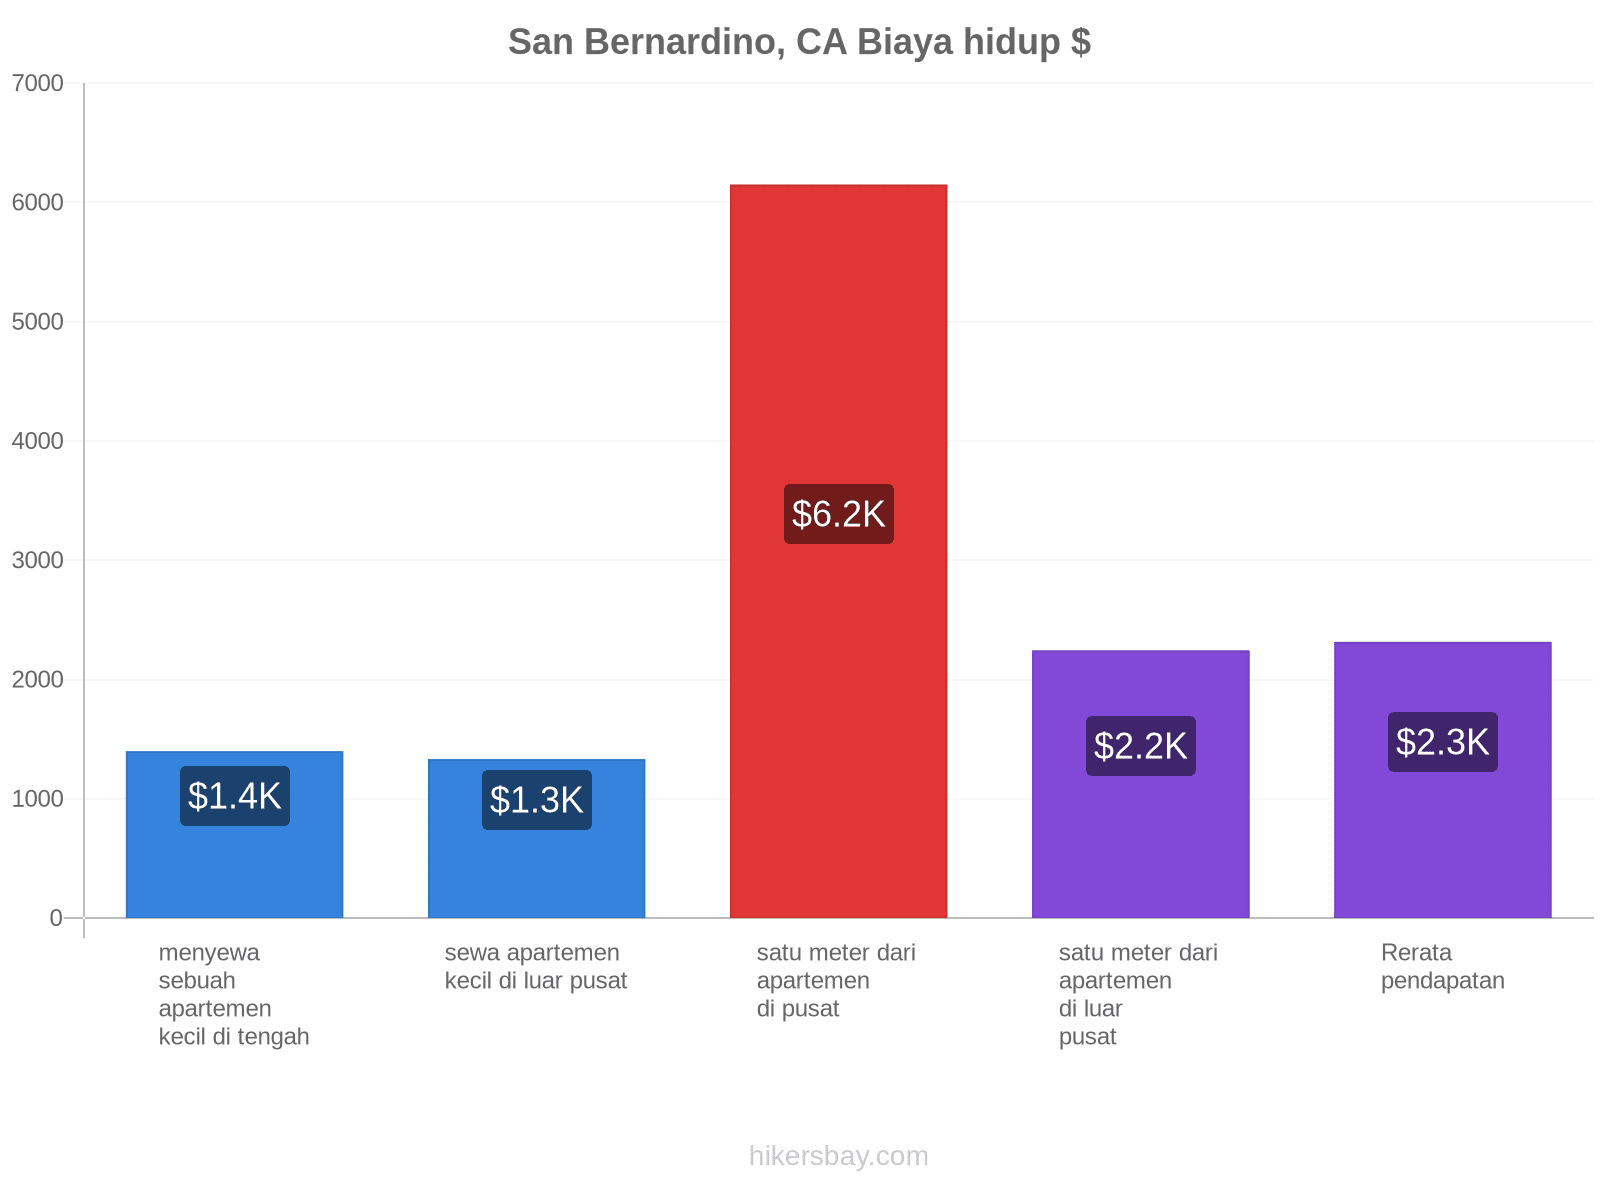 San Bernardino, CA biaya hidup hikersbay.com